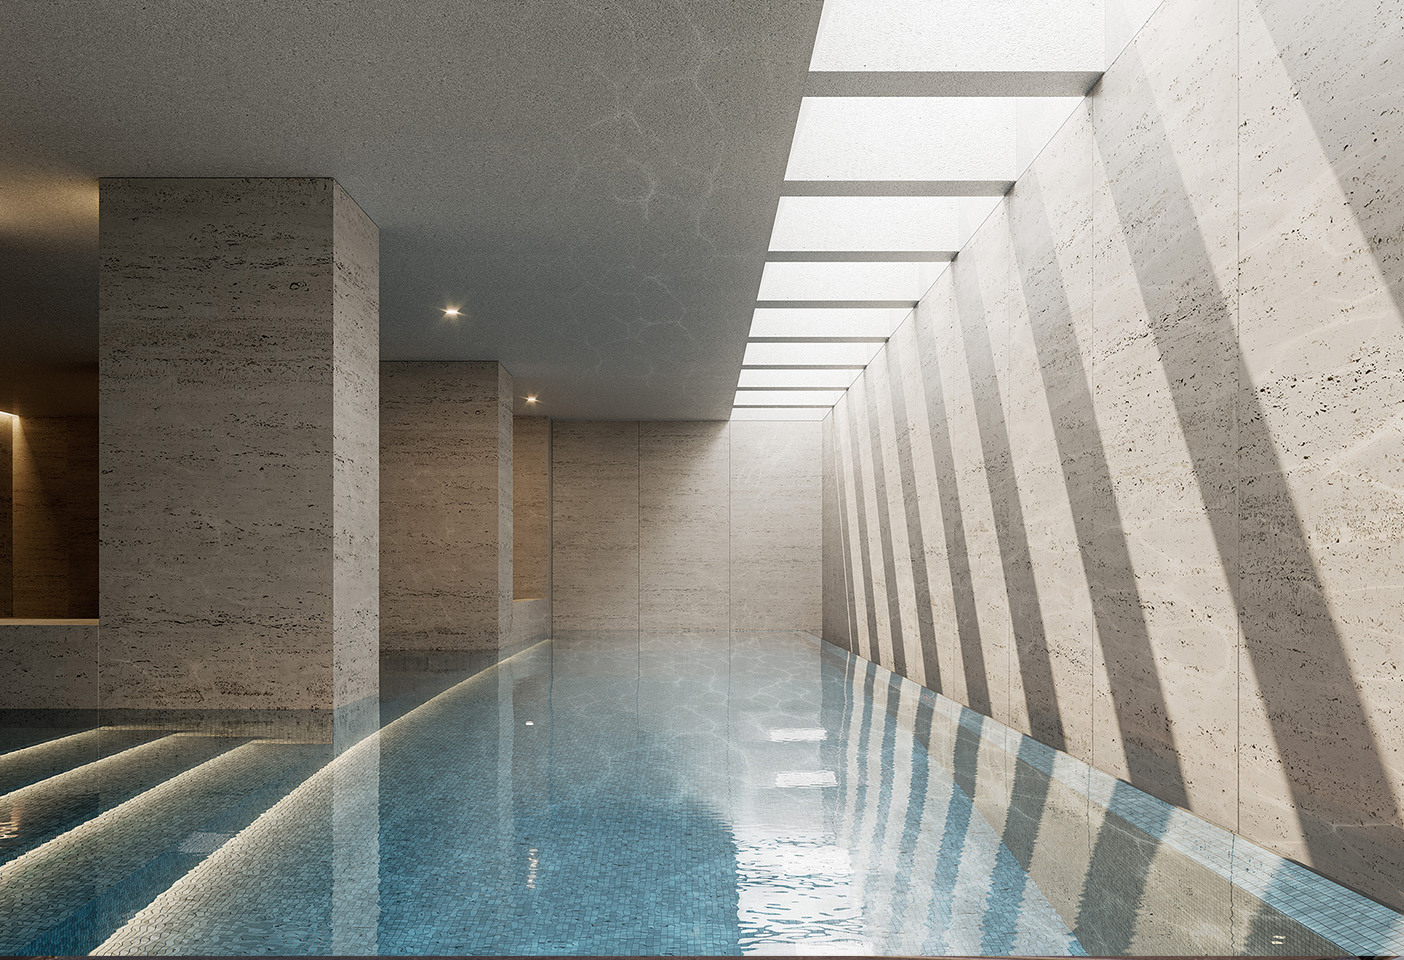 Aura's beautiful 'Zumthor-esque' pool that draws light into the building. CGI c/o Aura by Aqualand. 